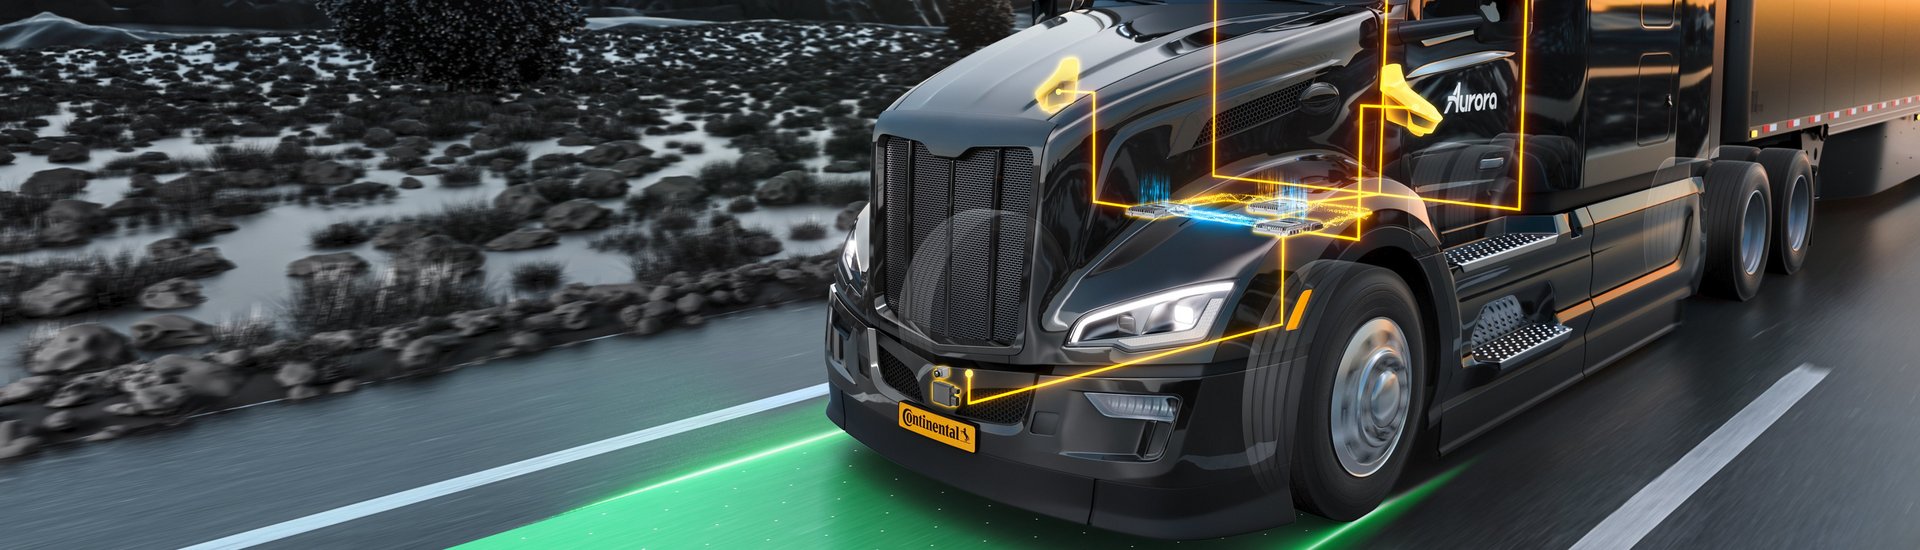 csm_continental-aurora_pp_autonomous-trucking-systems_9cacc46dcf